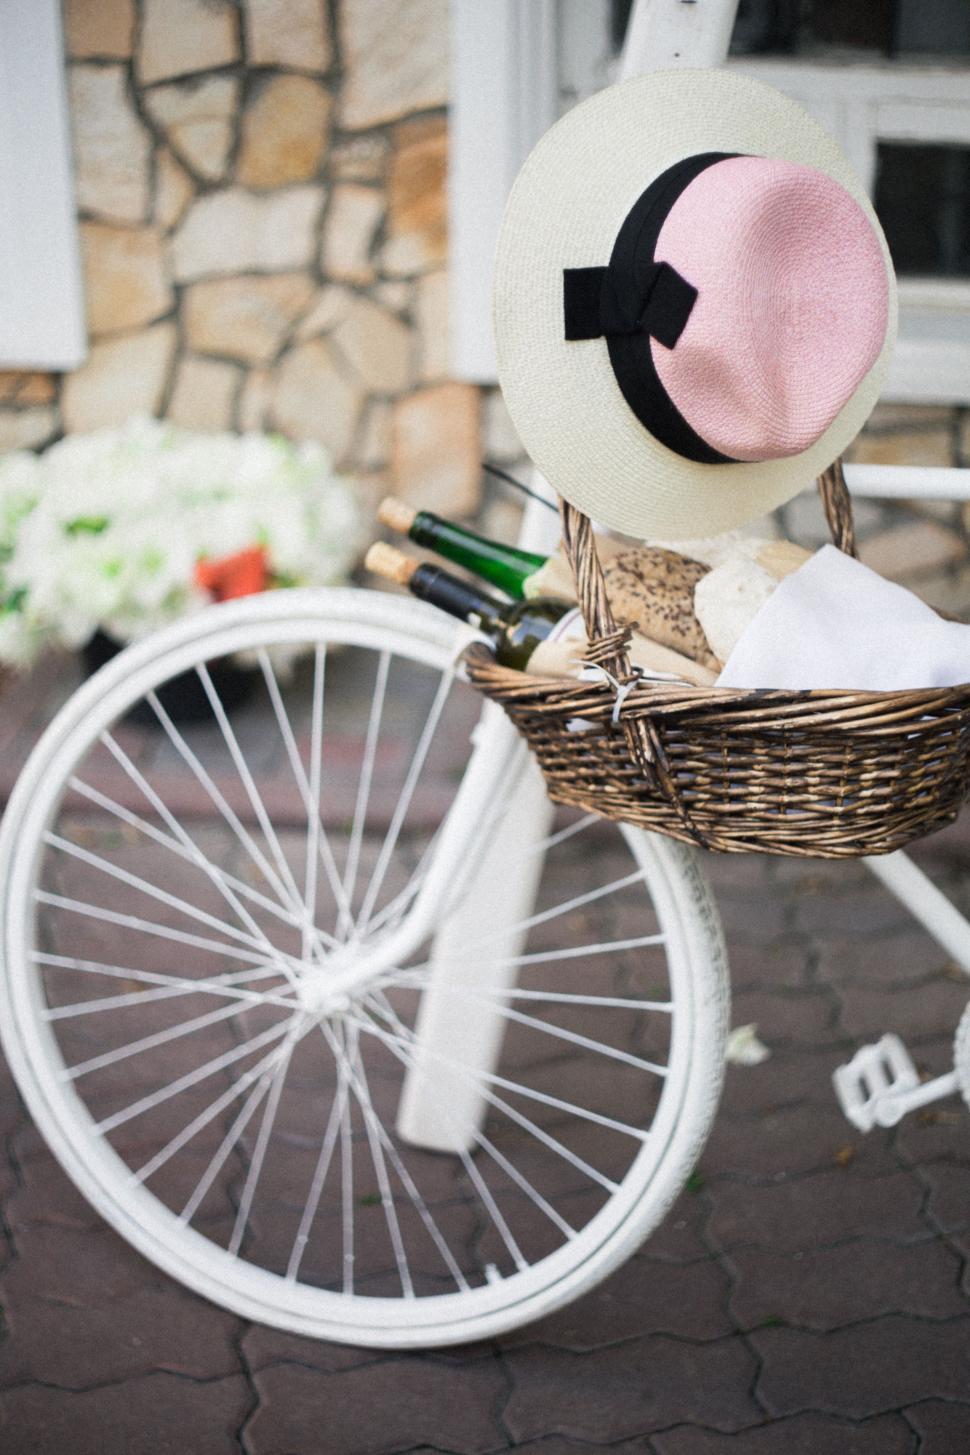 Free Image of Stuffed Animal in Basket on Bike 